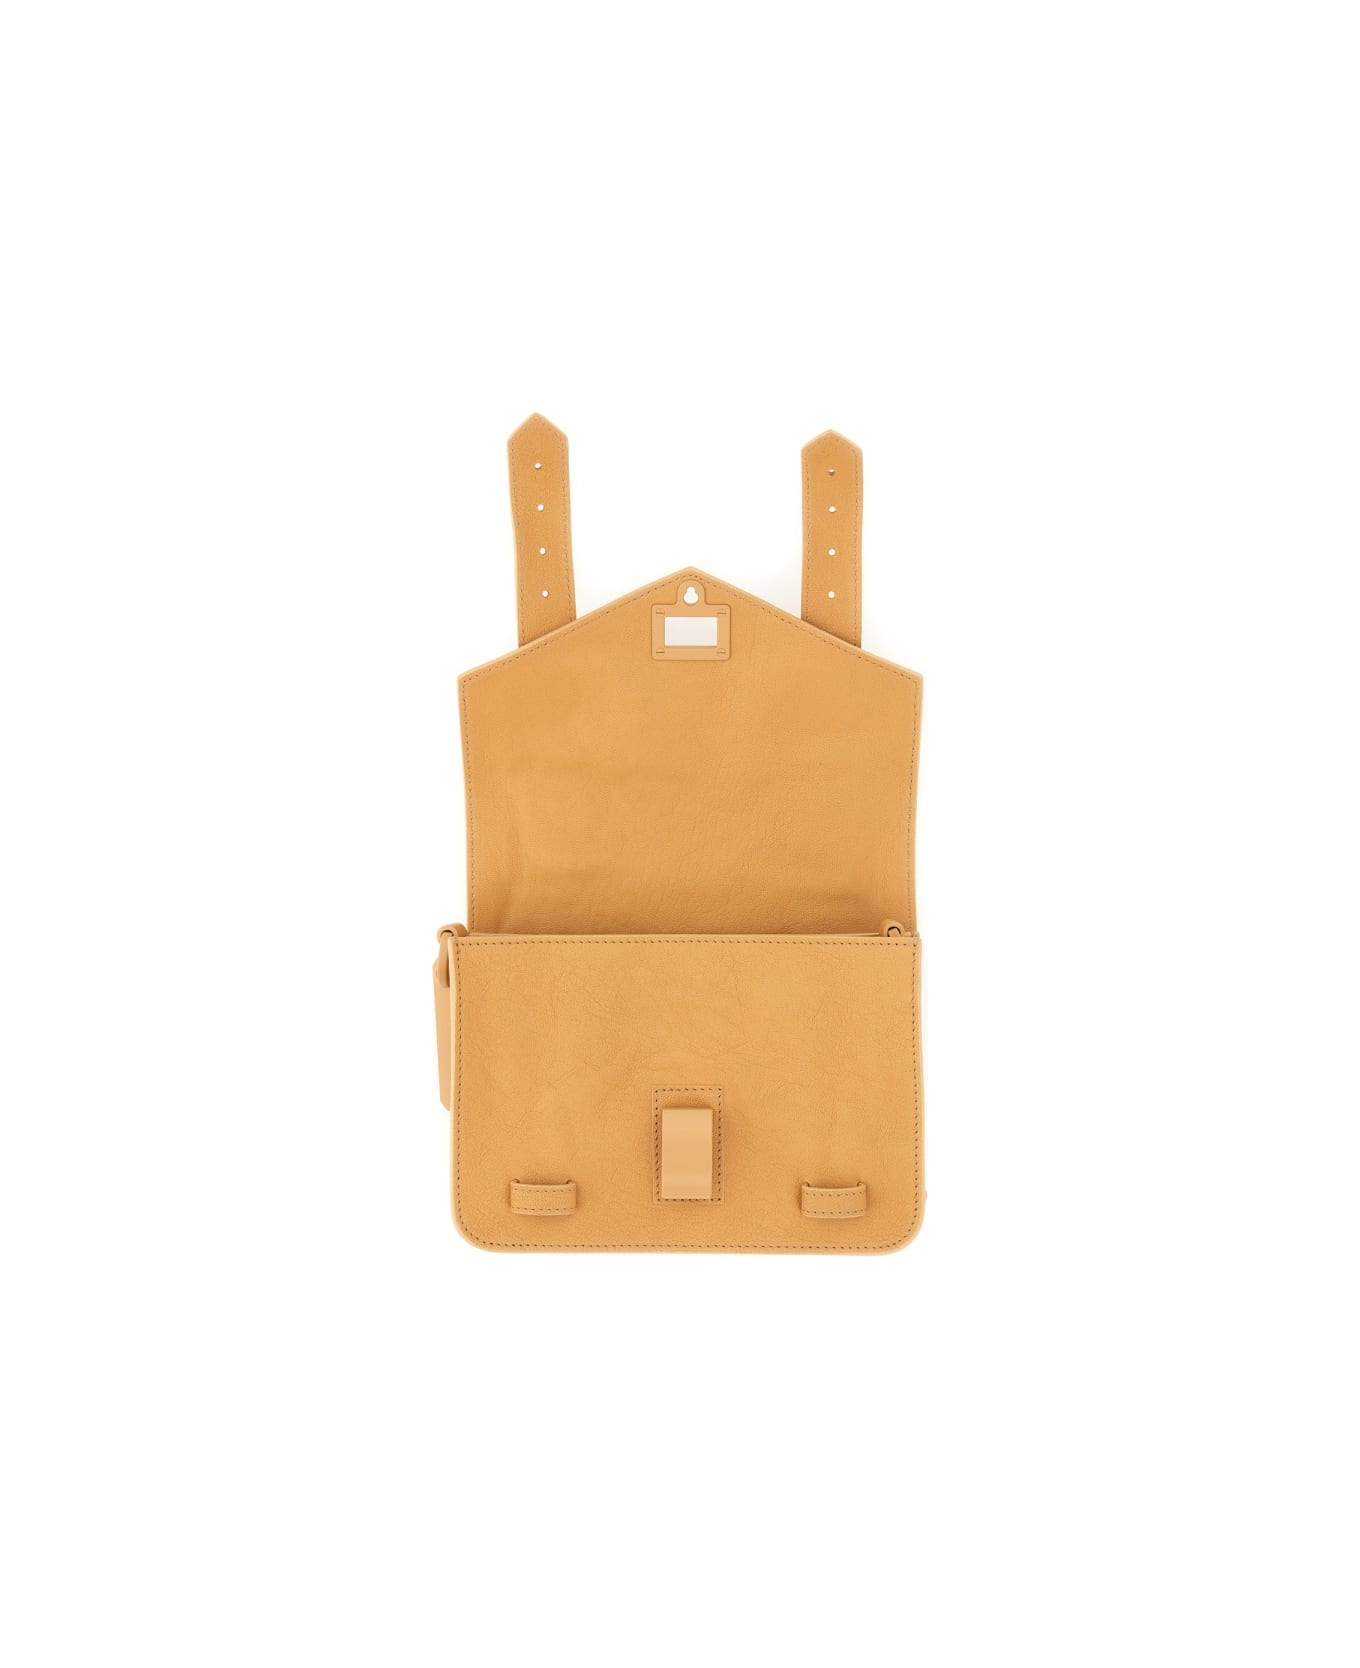 Proenza Schouler Ps1 Mini Shoulder Bag - BEIGE ショルダーバッグ